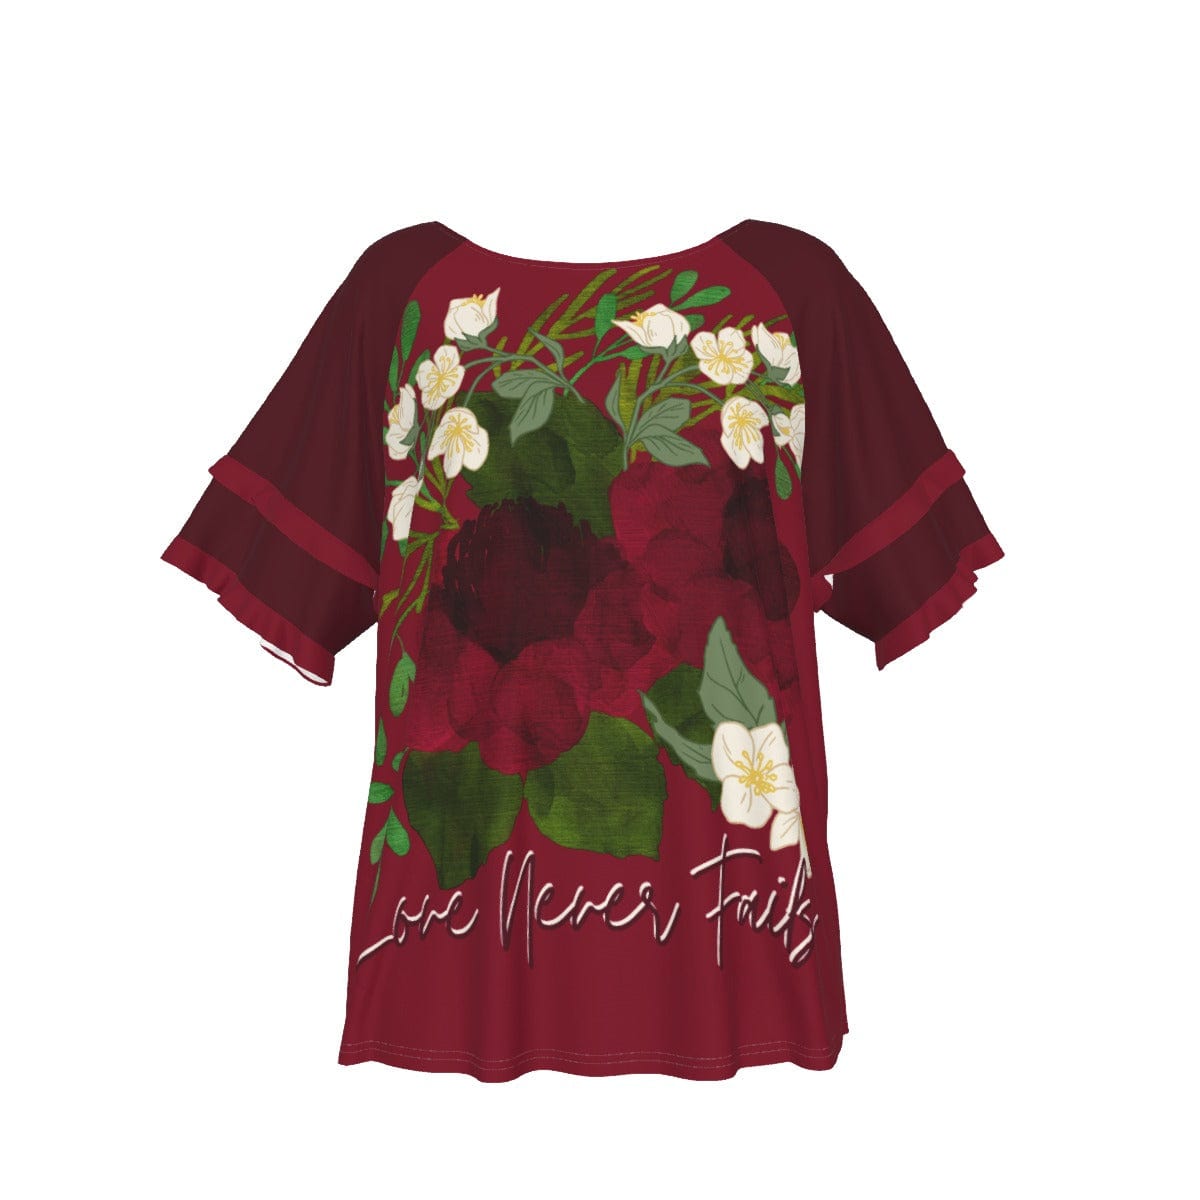 Yoycol 2XL / White Love Never Fails - Women's Round Neck Raglan Sleeve T-shirt